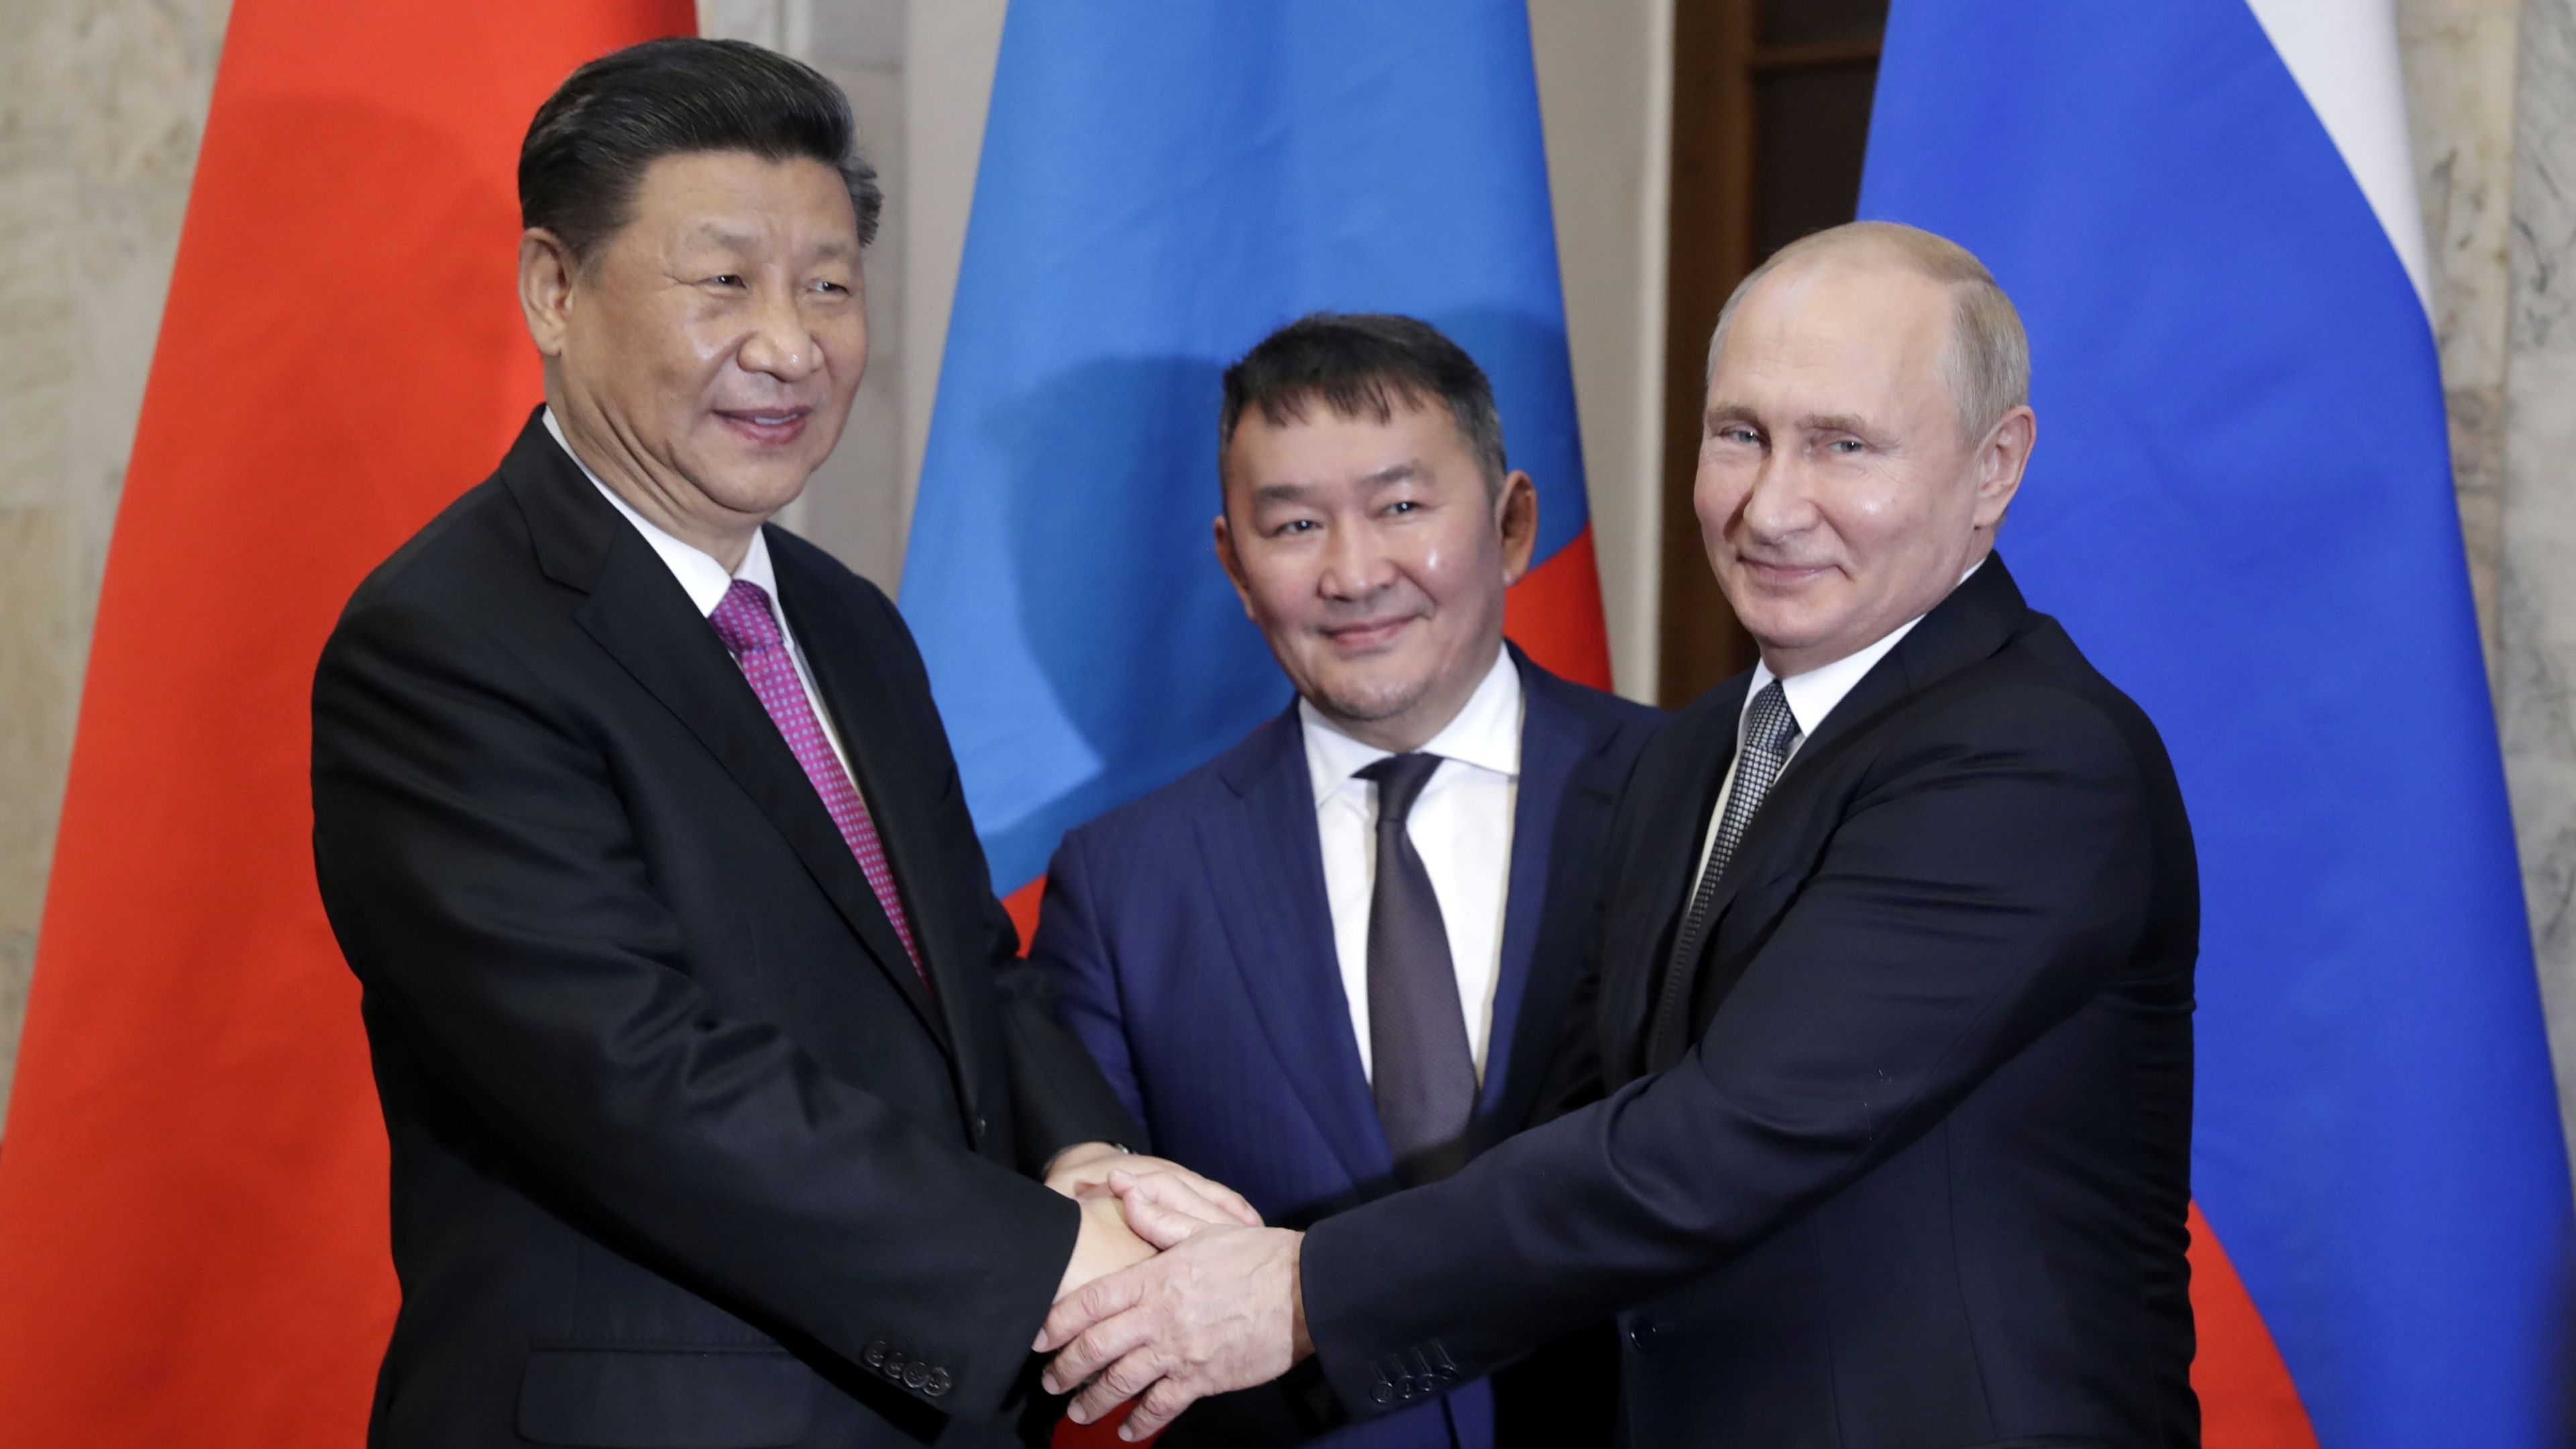 El presidente de Mongolia, Khaltmaagiin Battulga, entre su homólogo chino, Xi Jinping, y ruso, Vladimir Putin.